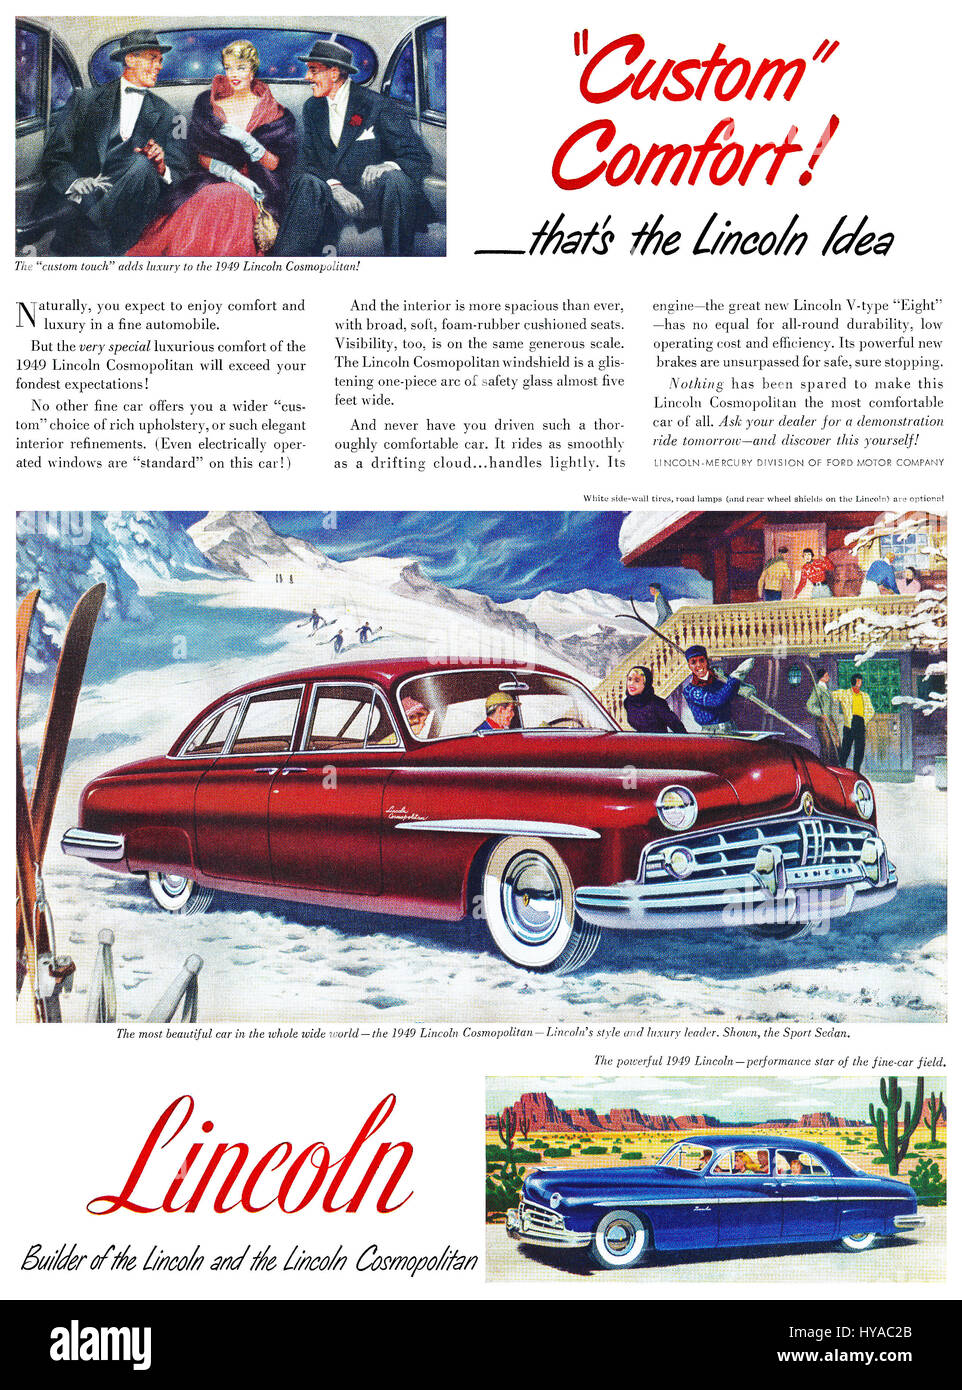 1949 U.S. advertisement for the Ford Lincoln Cosmopolitan automobile. Stock Photo